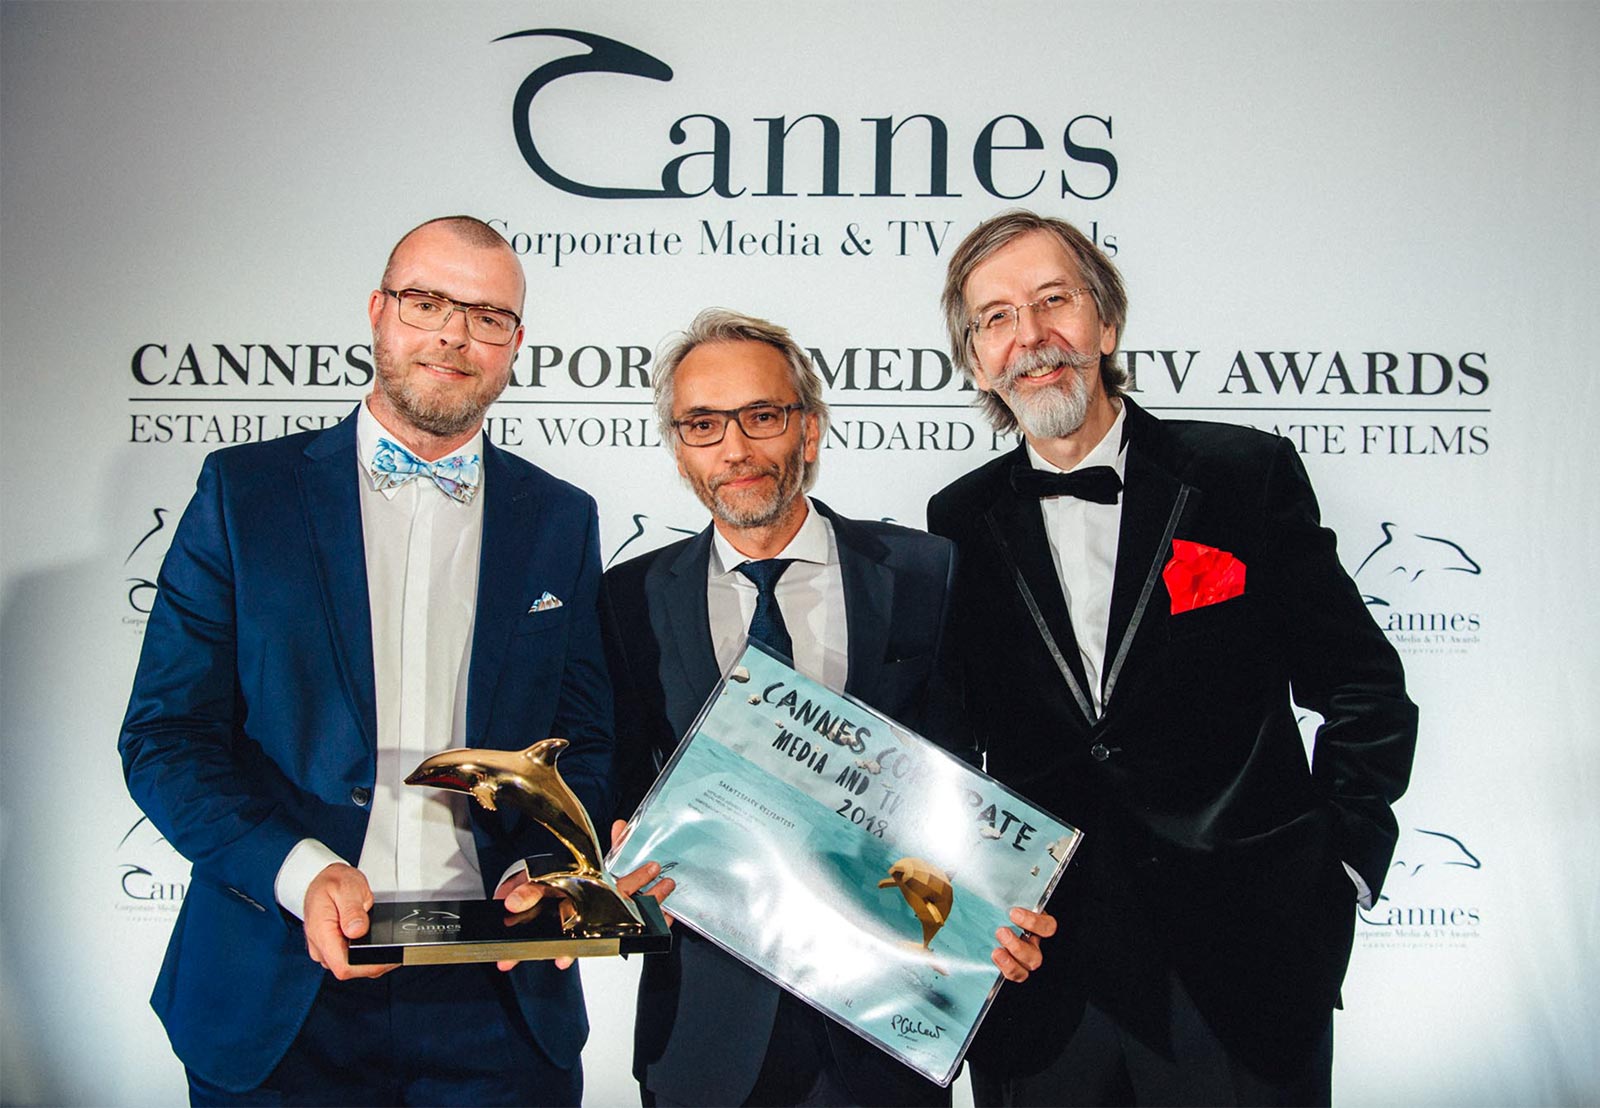 Creative Director Jörg Stöckigt und Managing Partner Andreas Felder von Rembrand mit Alexander V. Kammel, Gründer der Cannes Corporate Media & TV Awards (v.l.n.r.) an der Preisverleihung in Cannes.